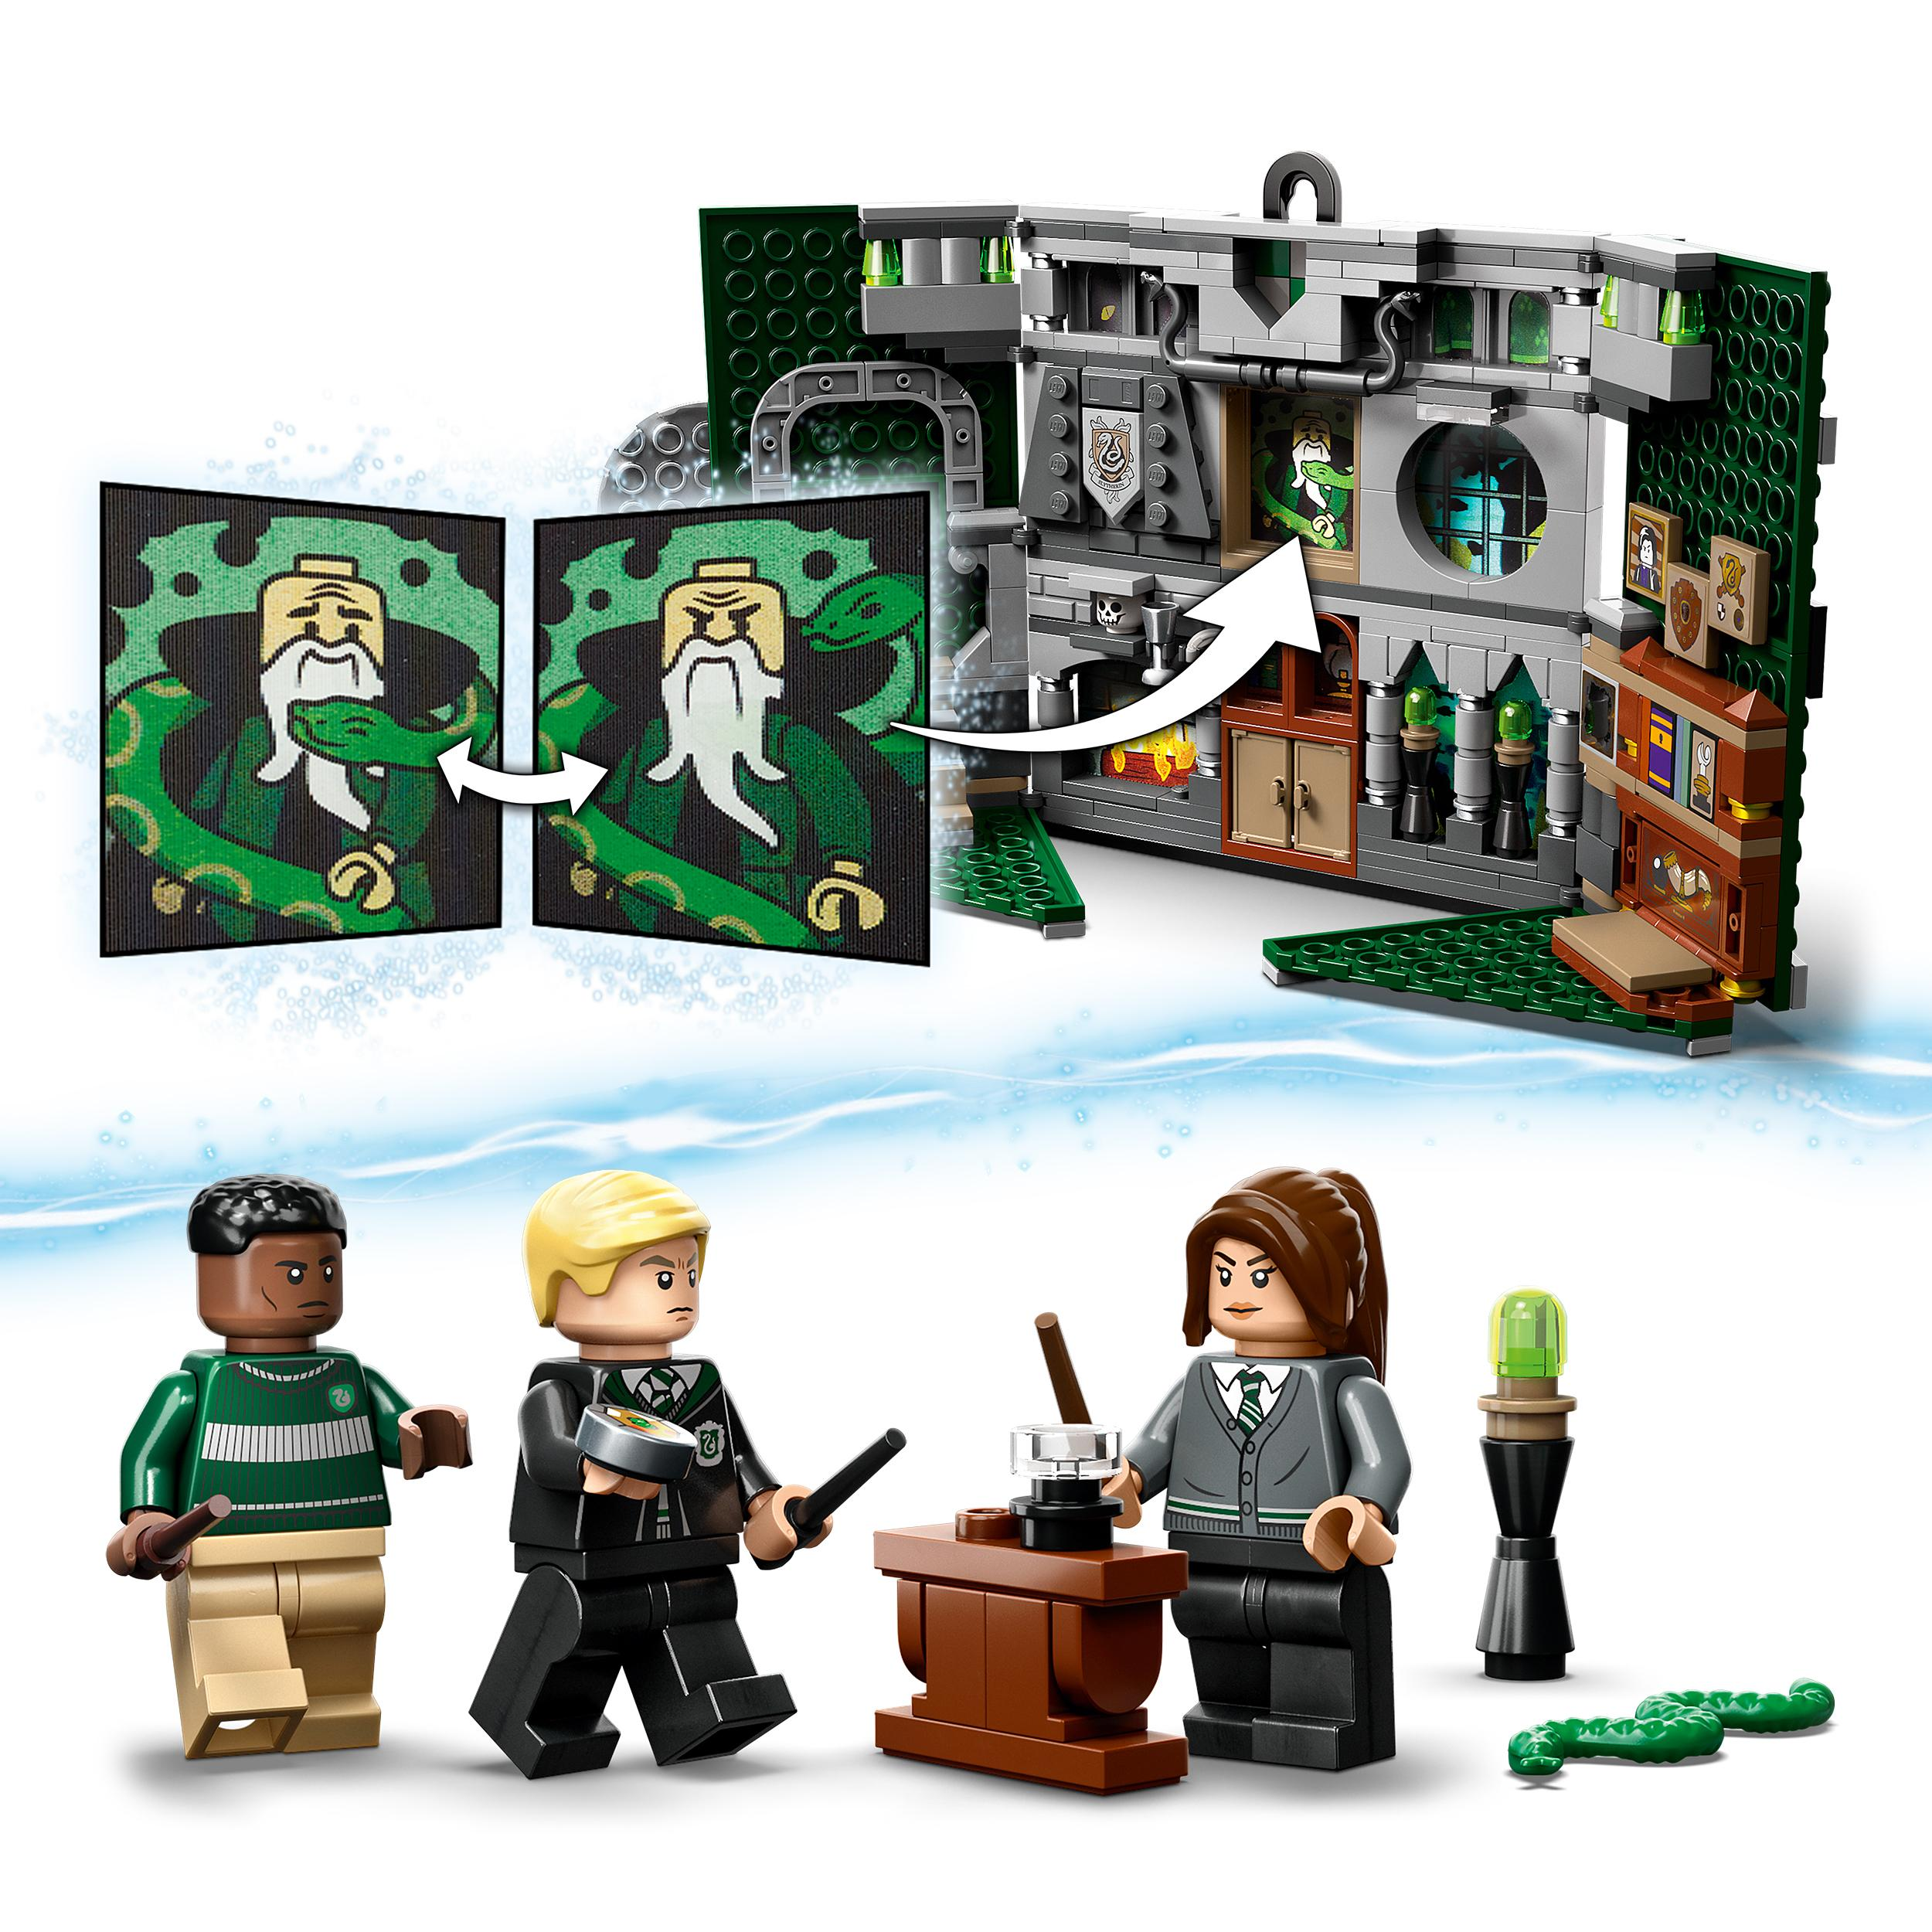 Mehrfarbig Slytherin Potter LEGO Bausatz, 76410 Hausbanner Harry